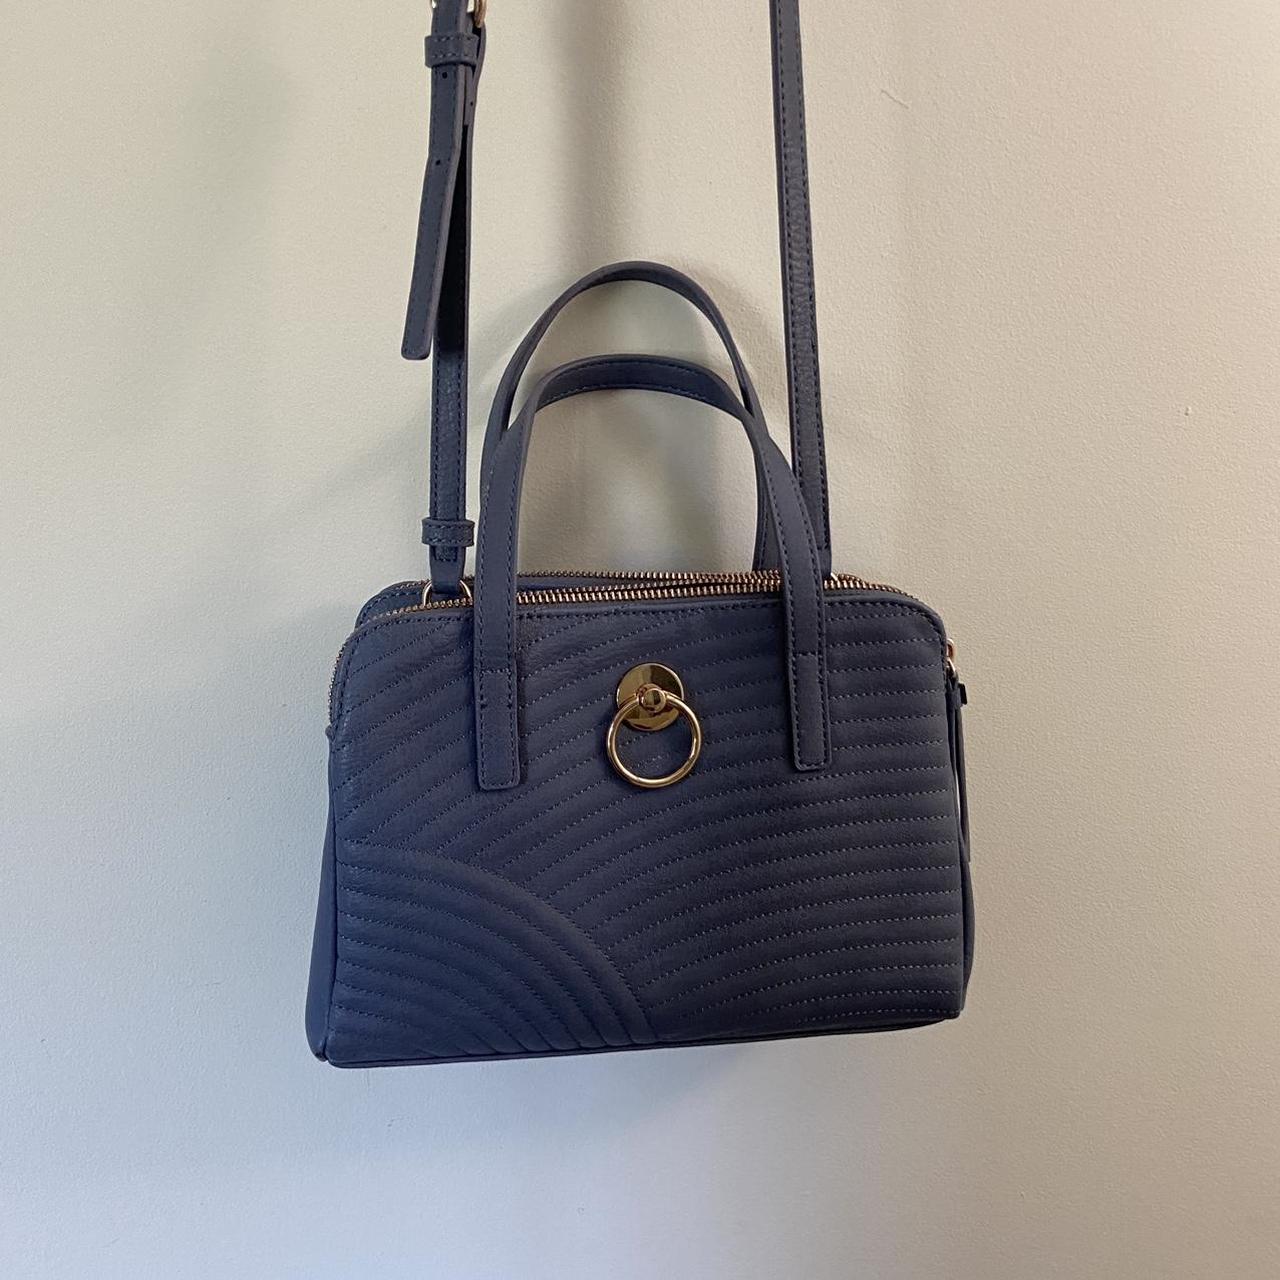 LC Lauren Conrad Women's Bag - Blue